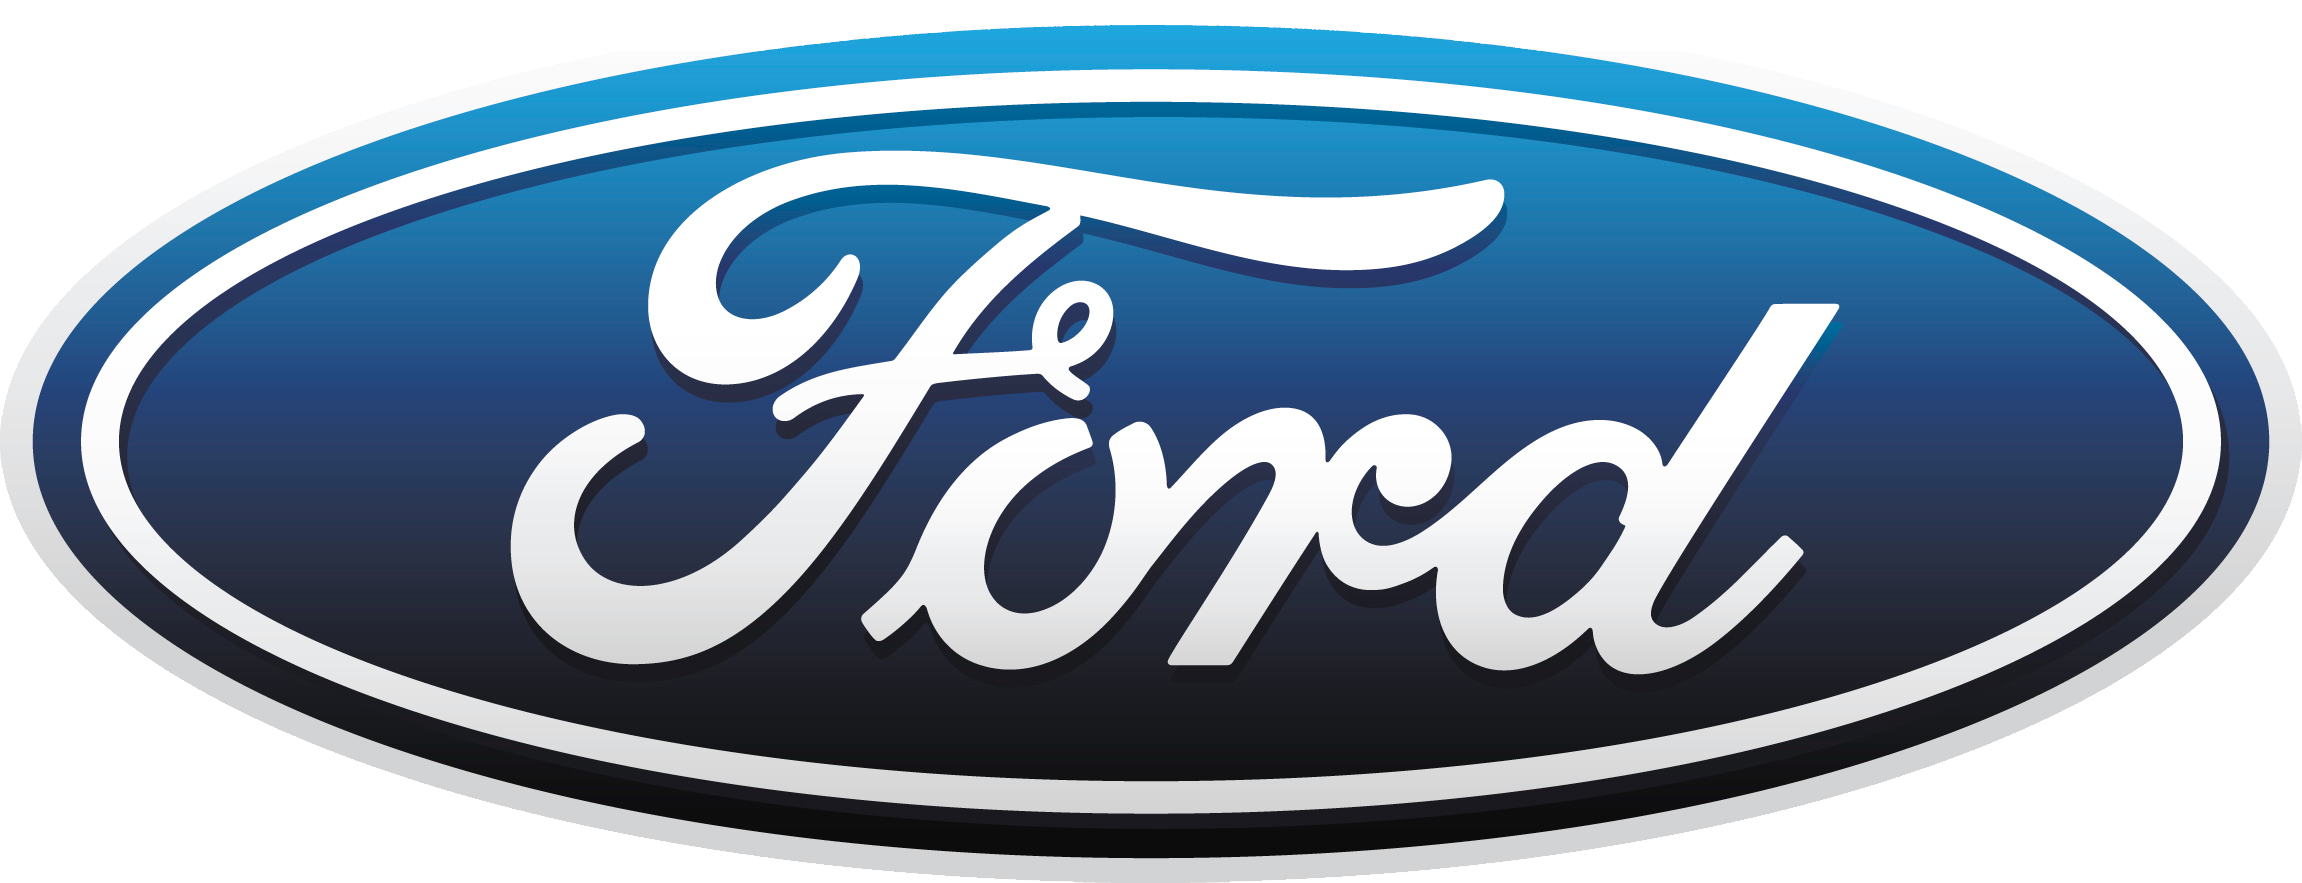 Ford logo clip art